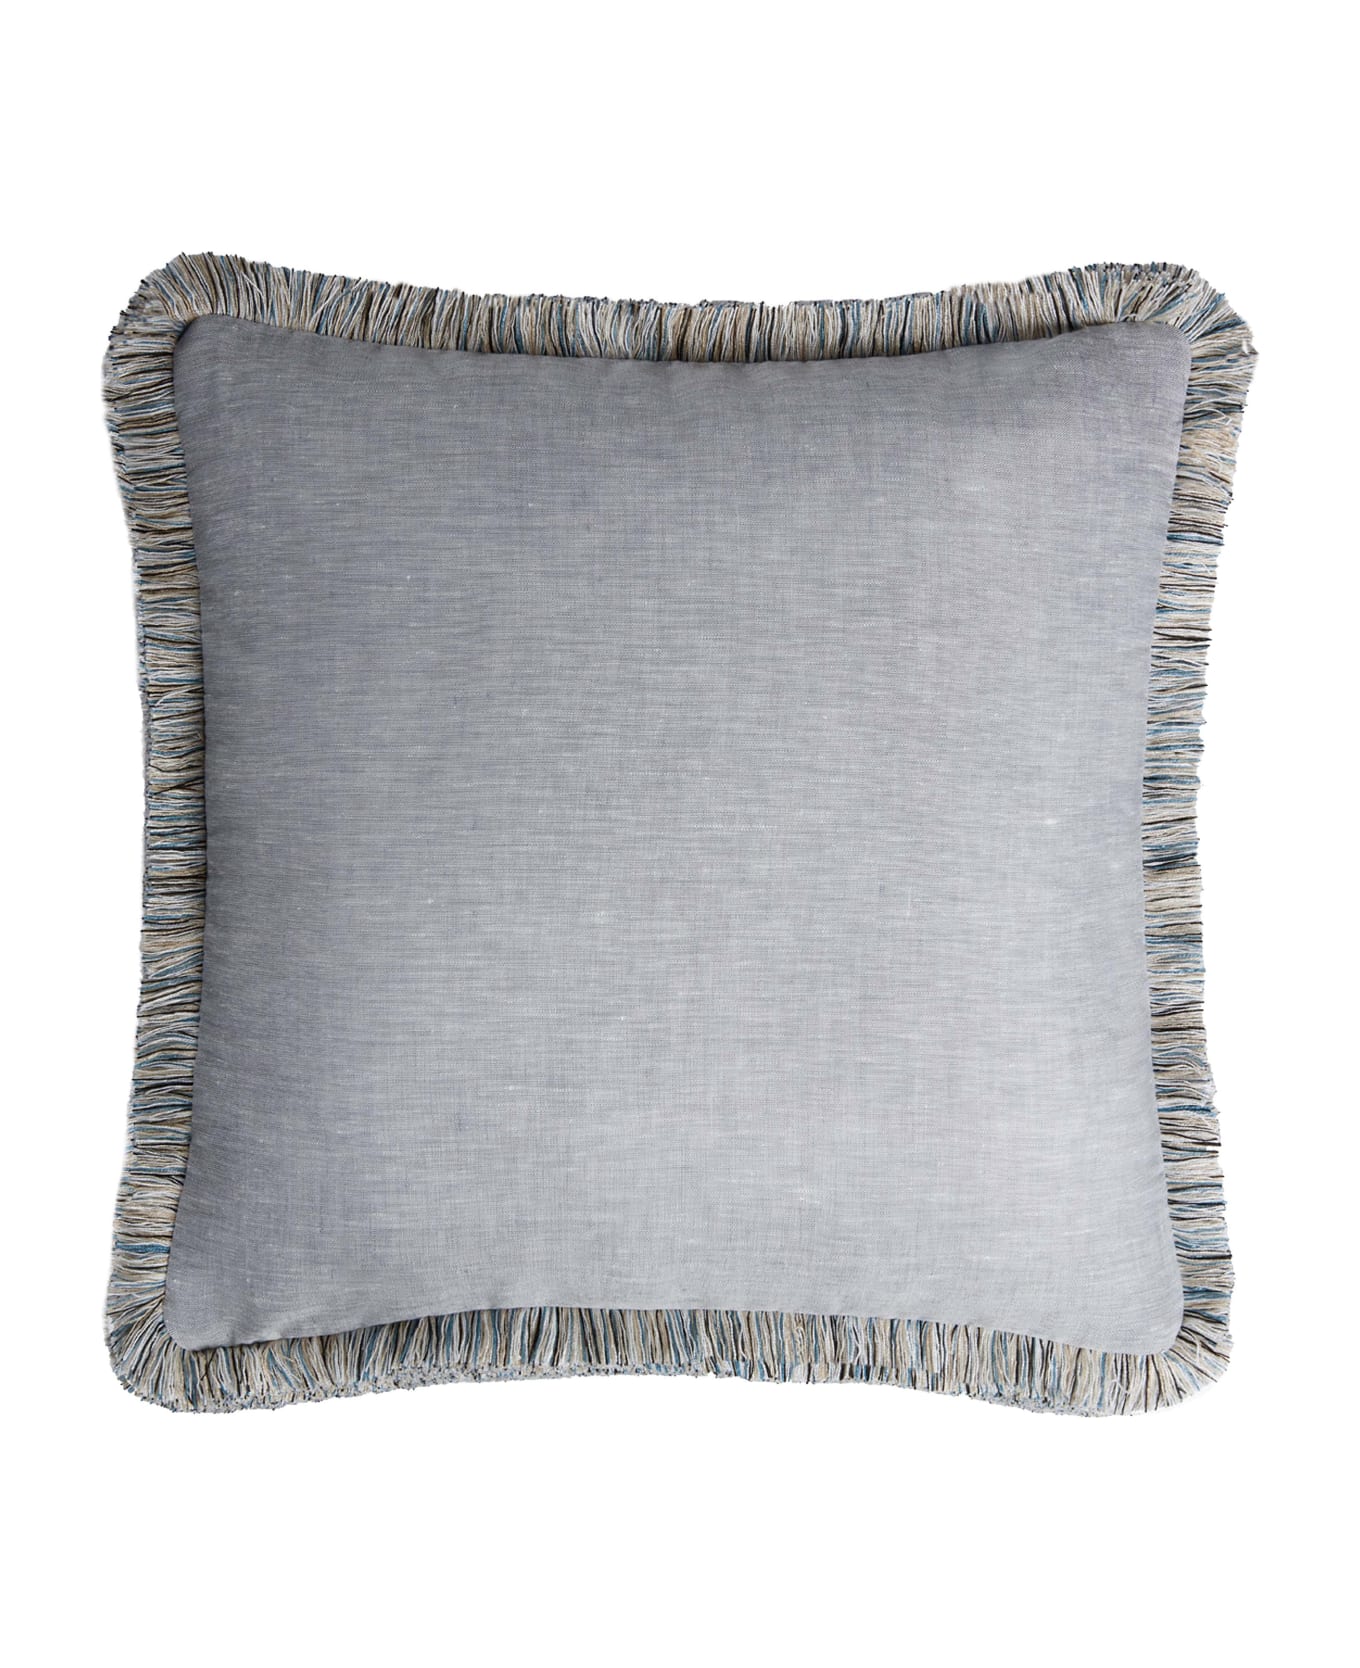 Lo Decor Capri Linen Pillow - Light Grey - Multicolor Fringes